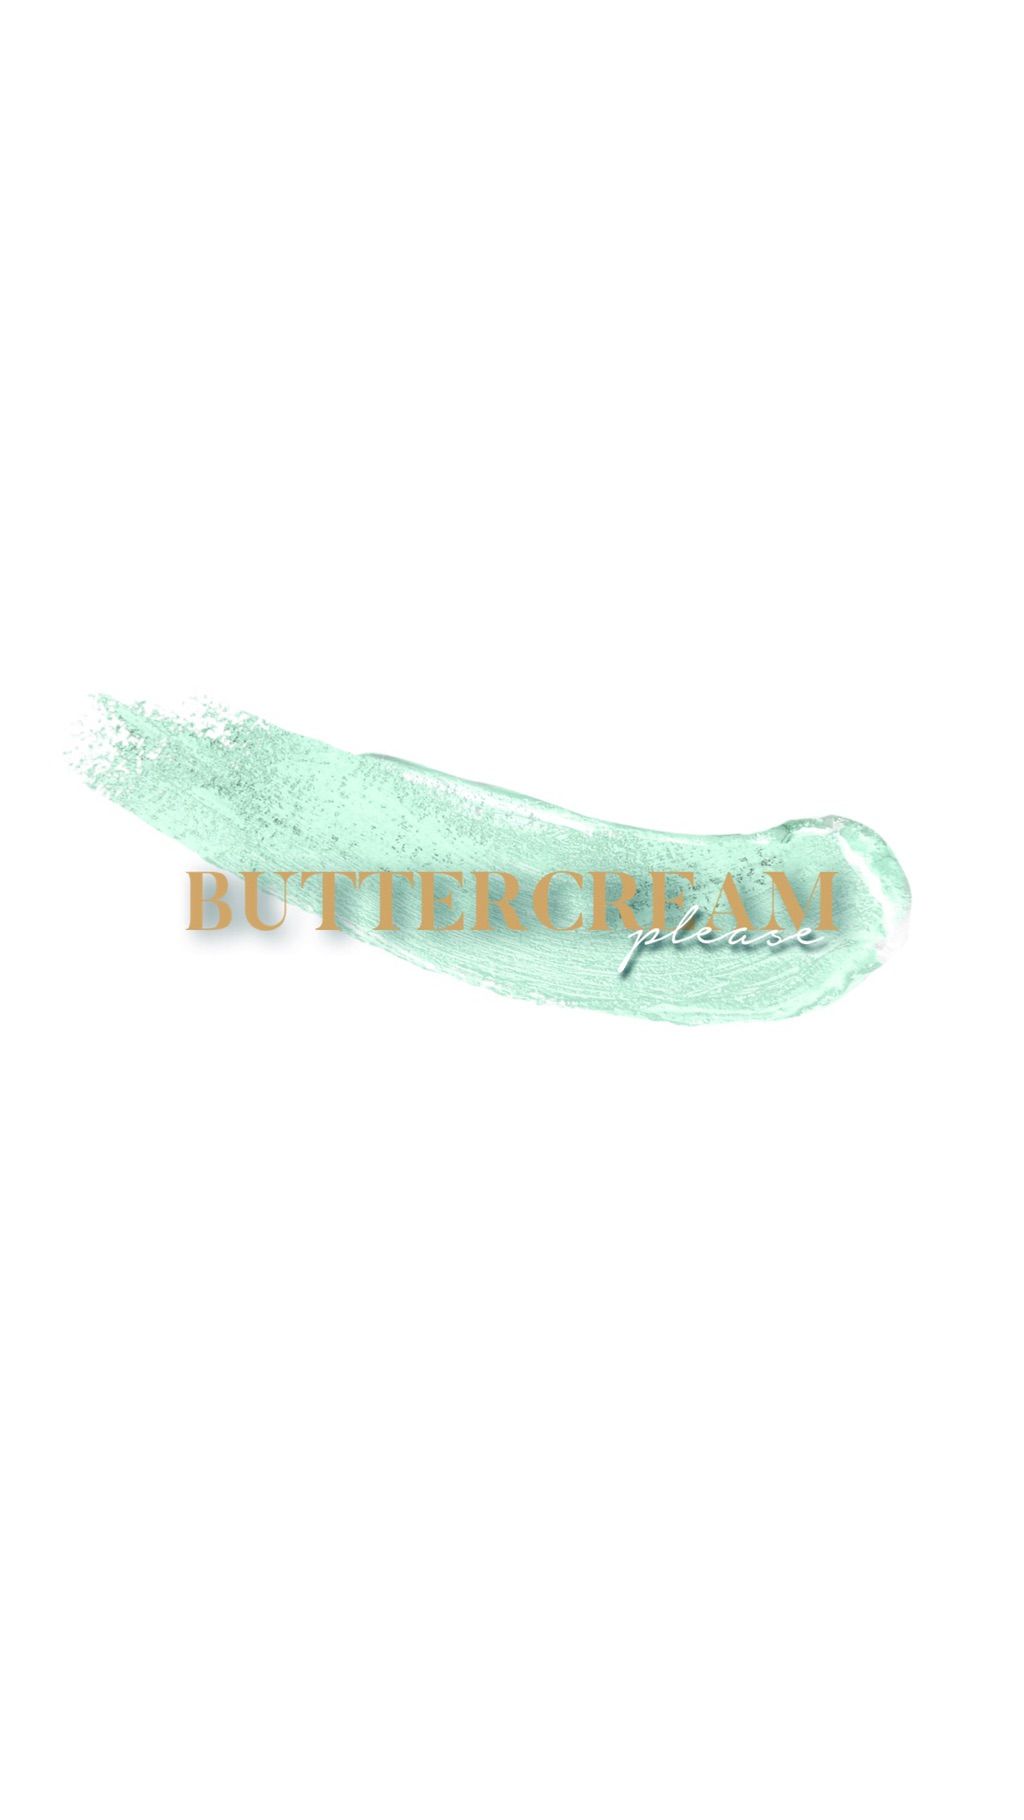 Buttercream Please